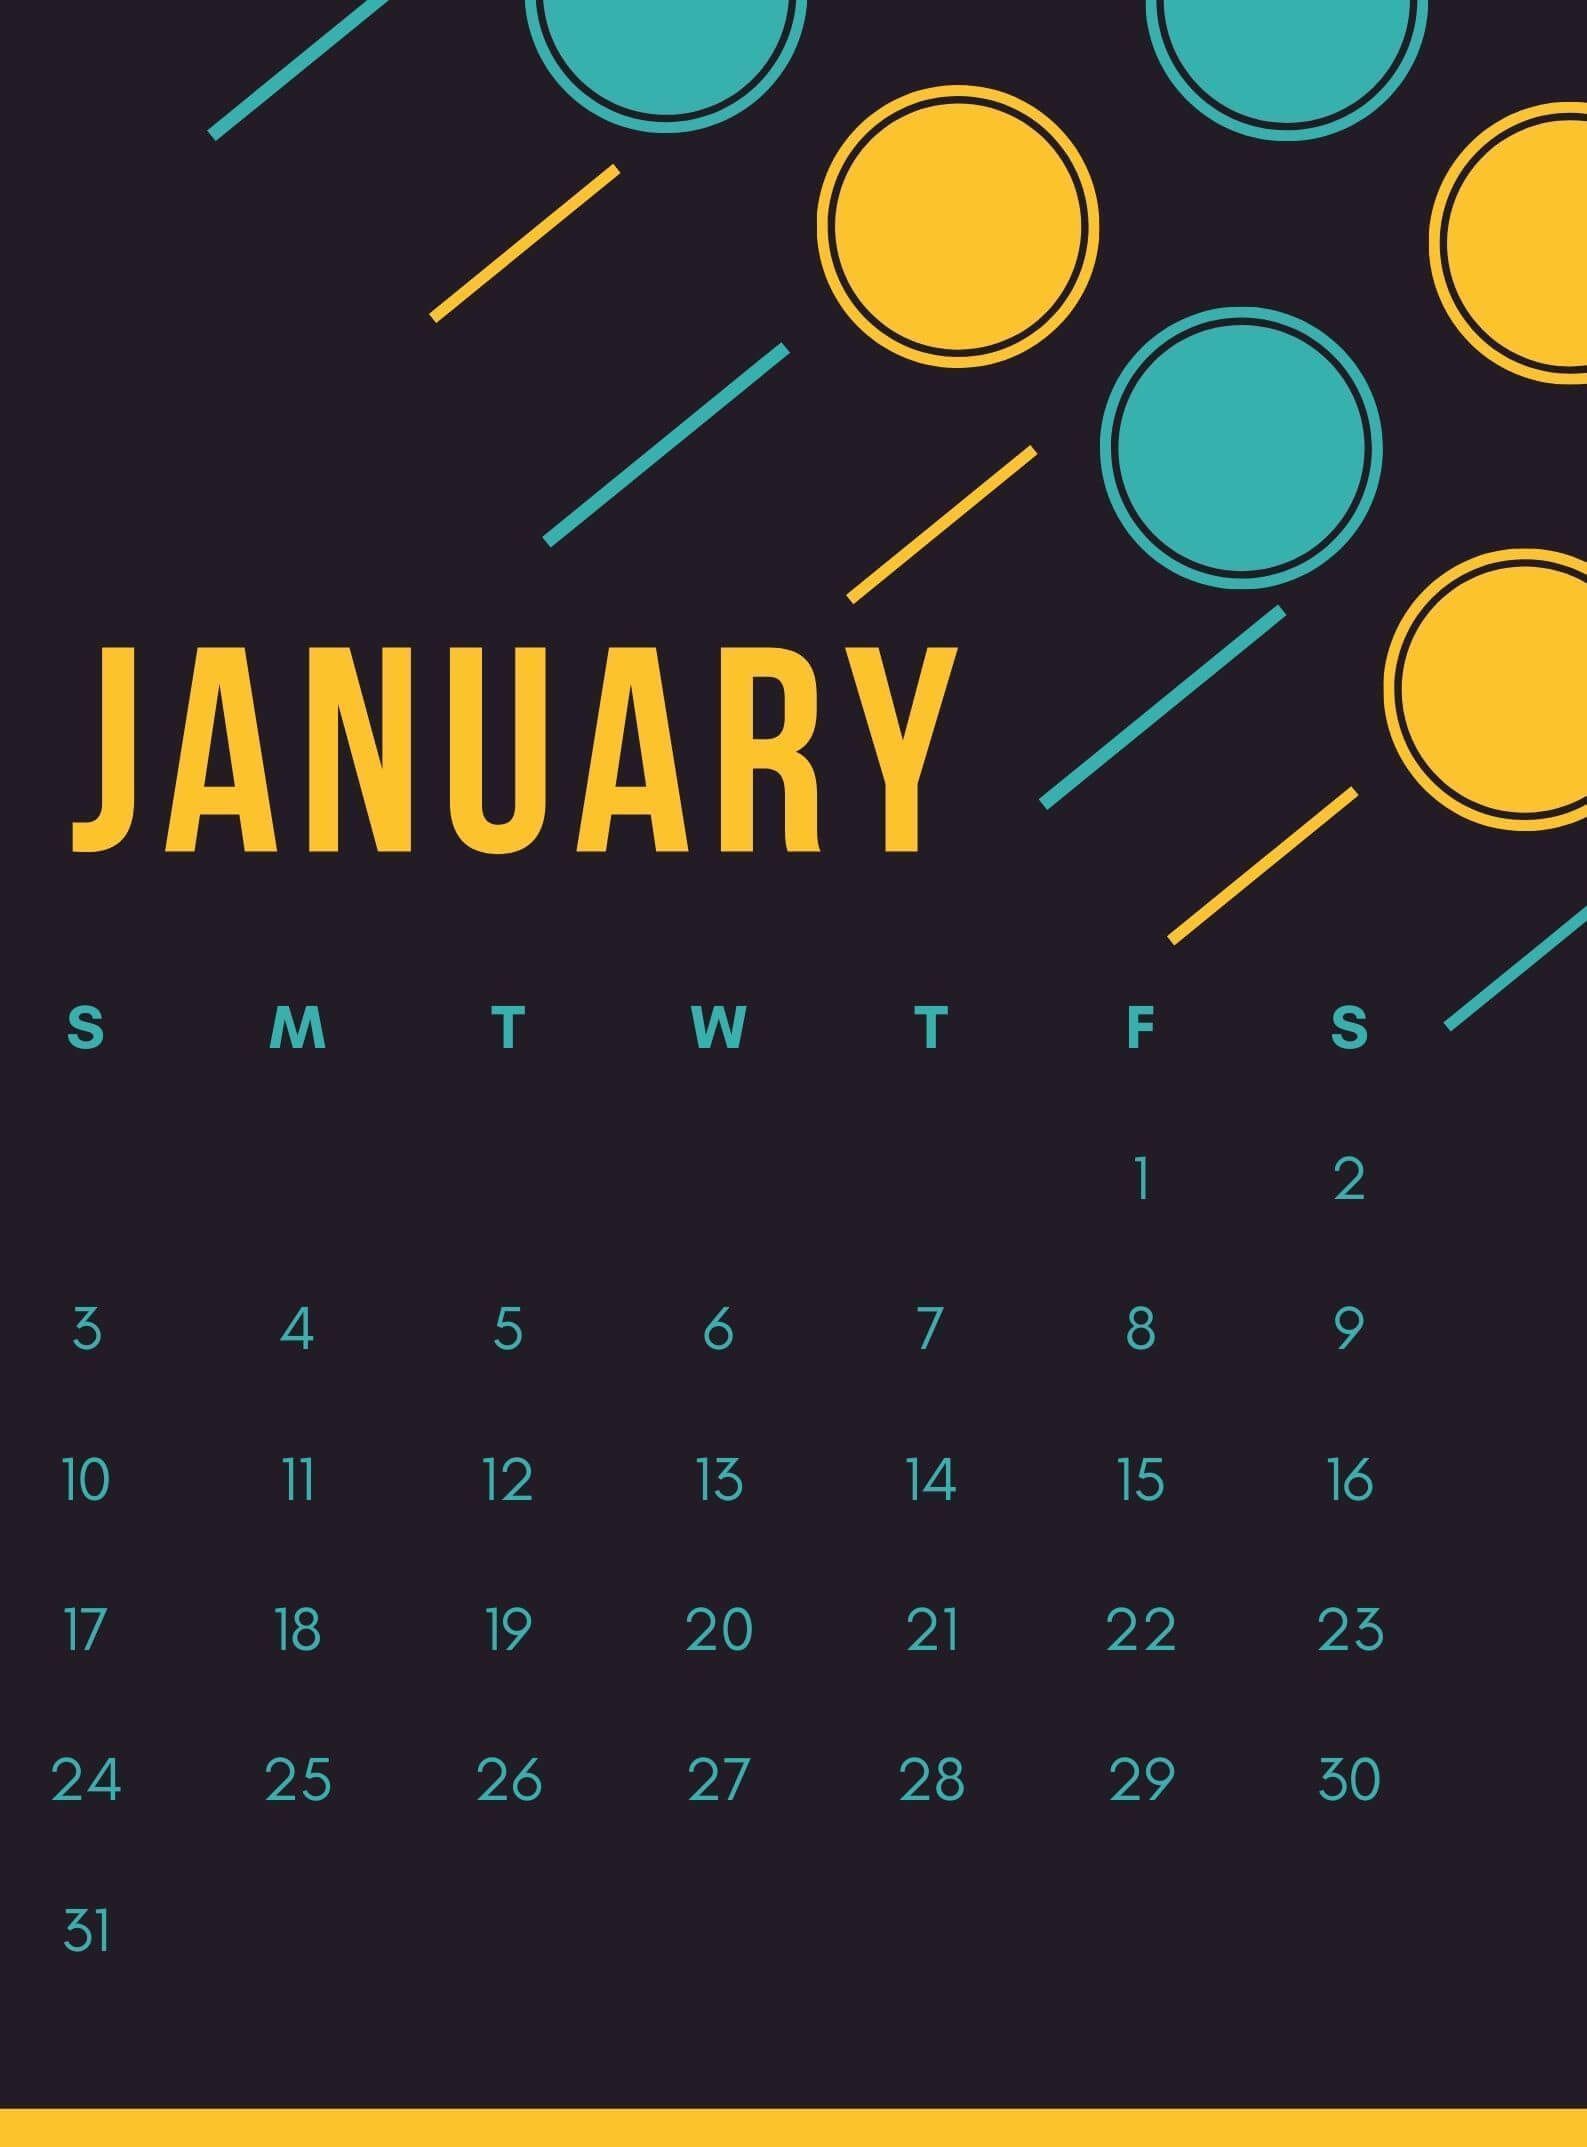 January 2021 Calendar Iphone Wallpaper Image ID 7